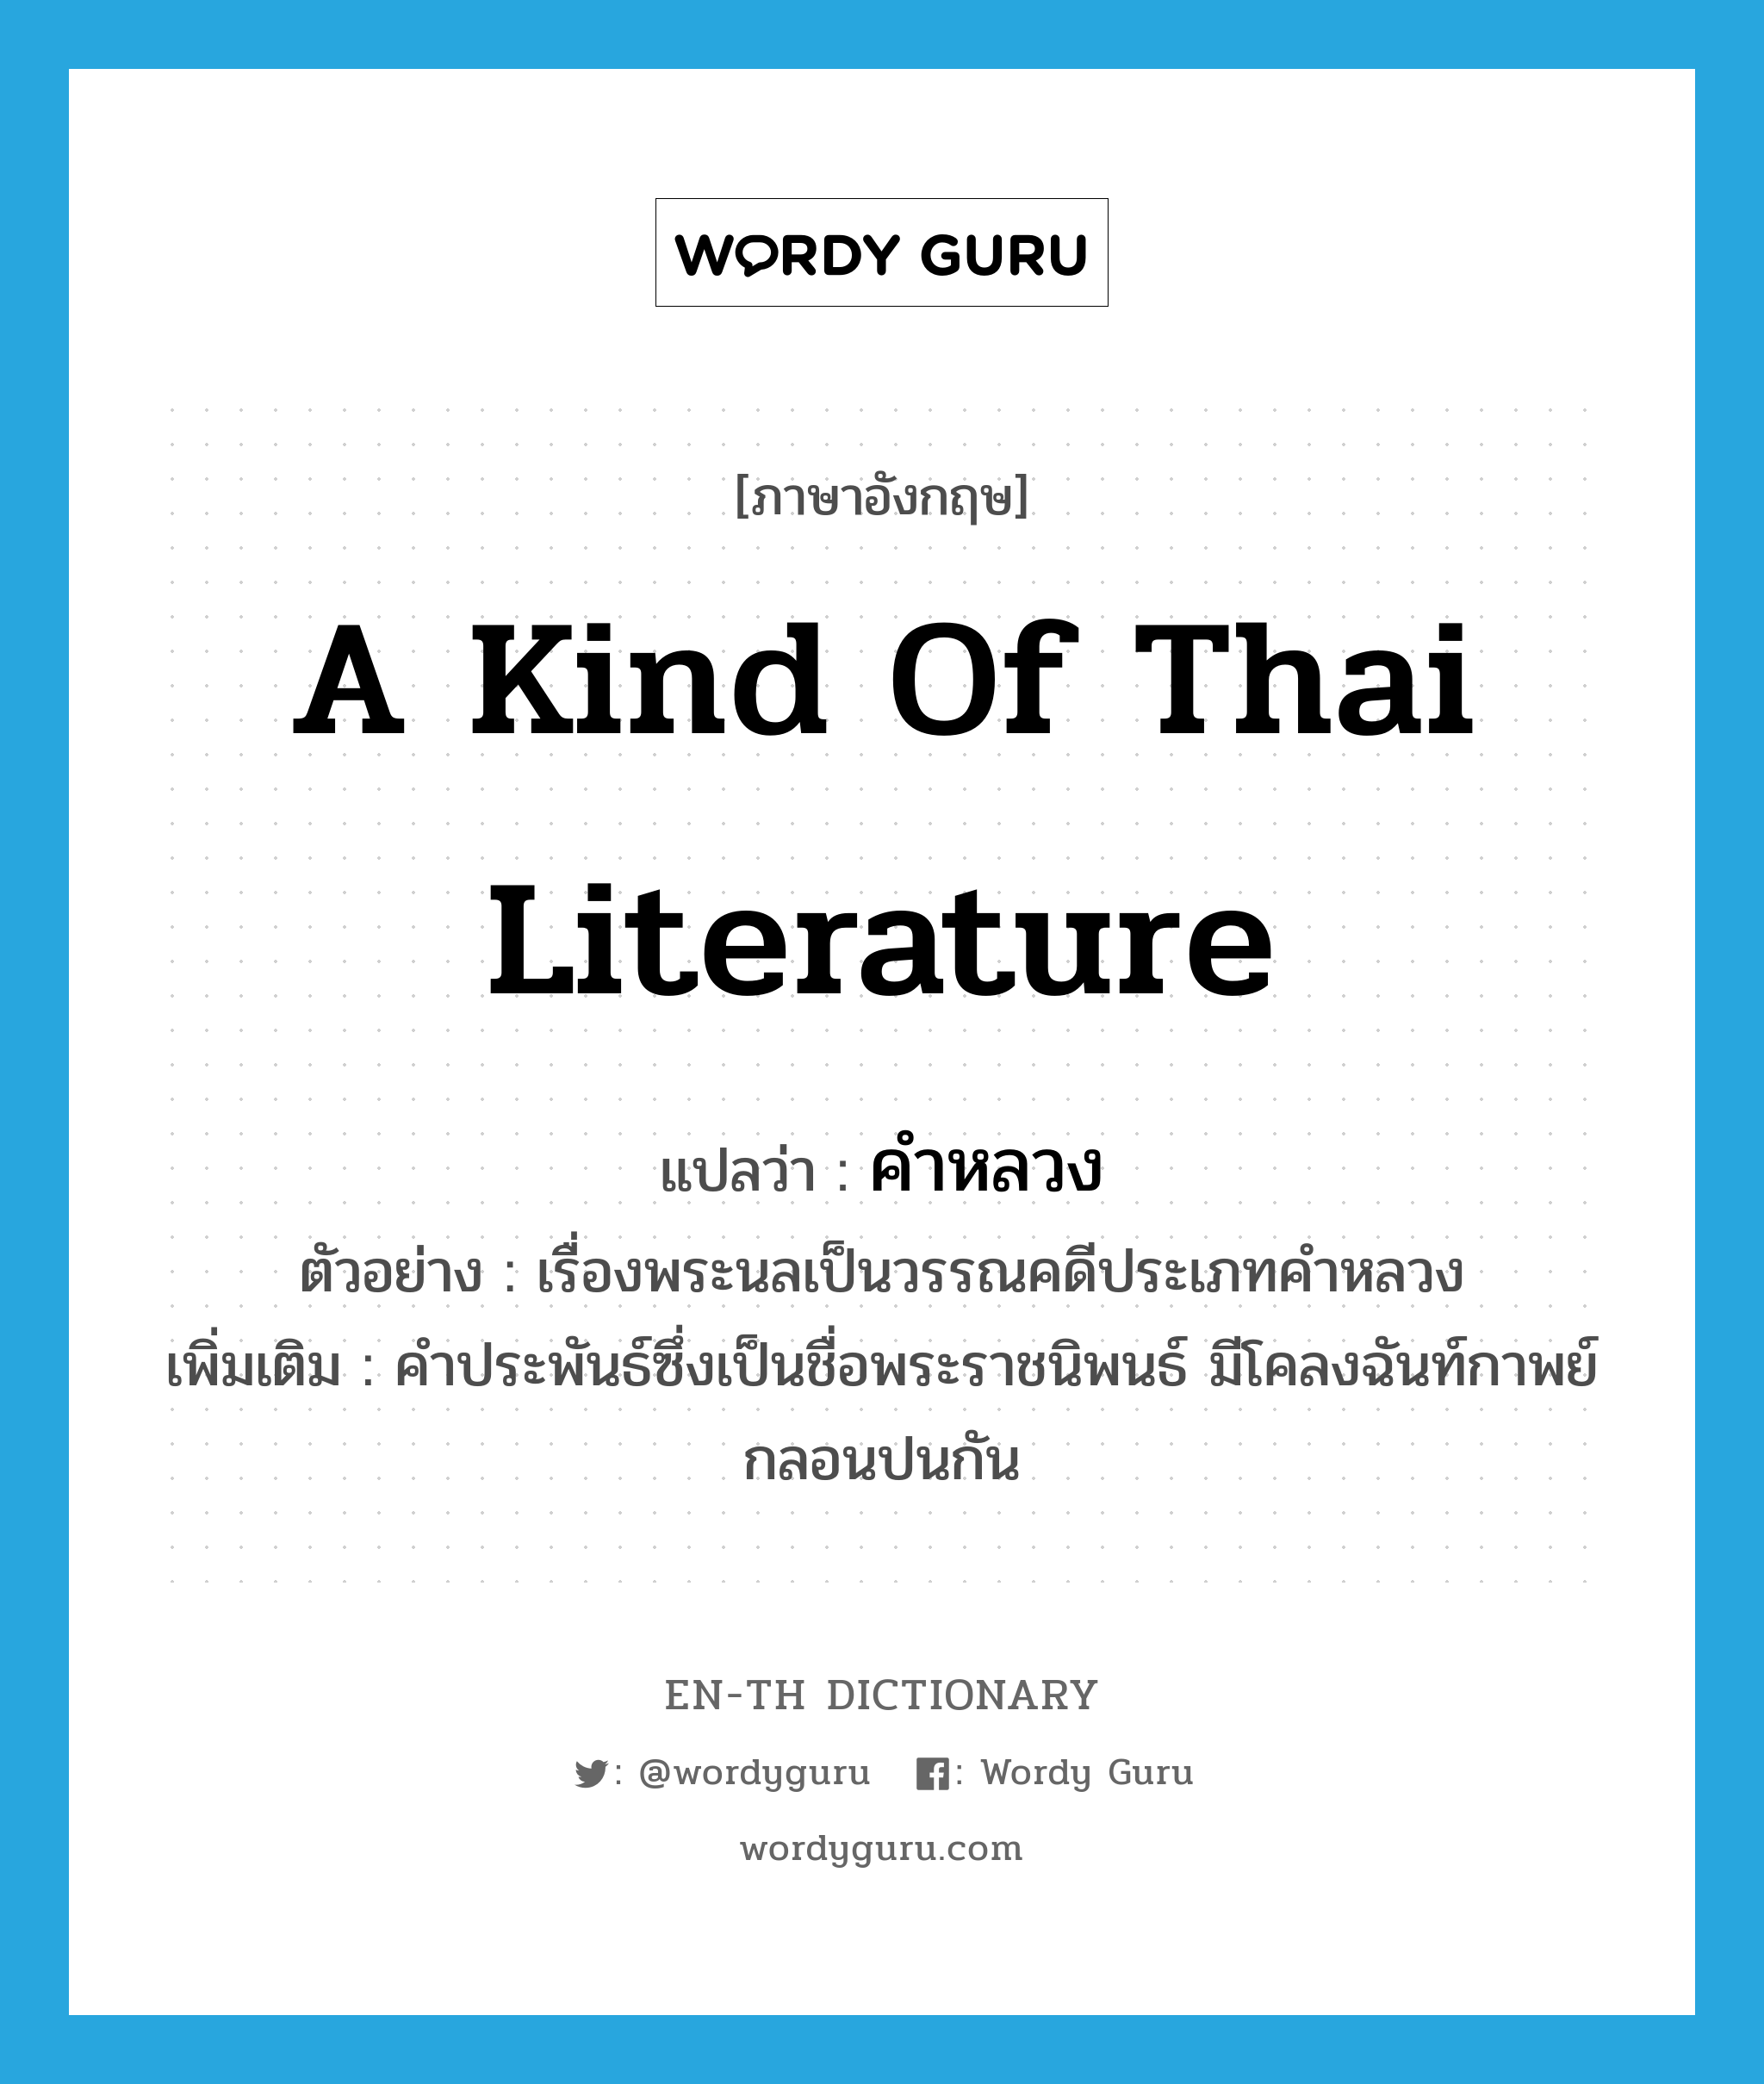 a kind of Thai literature แปลว่า? คำศัพท์ในกลุ่มประเภท N, คำศัพท์ภาษาอังกฤษ a kind of Thai literature แปลว่า คำหลวง ประเภท N ตัวอย่าง เรื่องพระนลเป็นวรรณคดีประเภทคำหลวง เพิ่มเติม คำประพันธ์ซึ่งเป็นชื่อพระราชนิพนธ์ มีโคลงฉันท์กาพย์กลอนปนกัน หมวด N